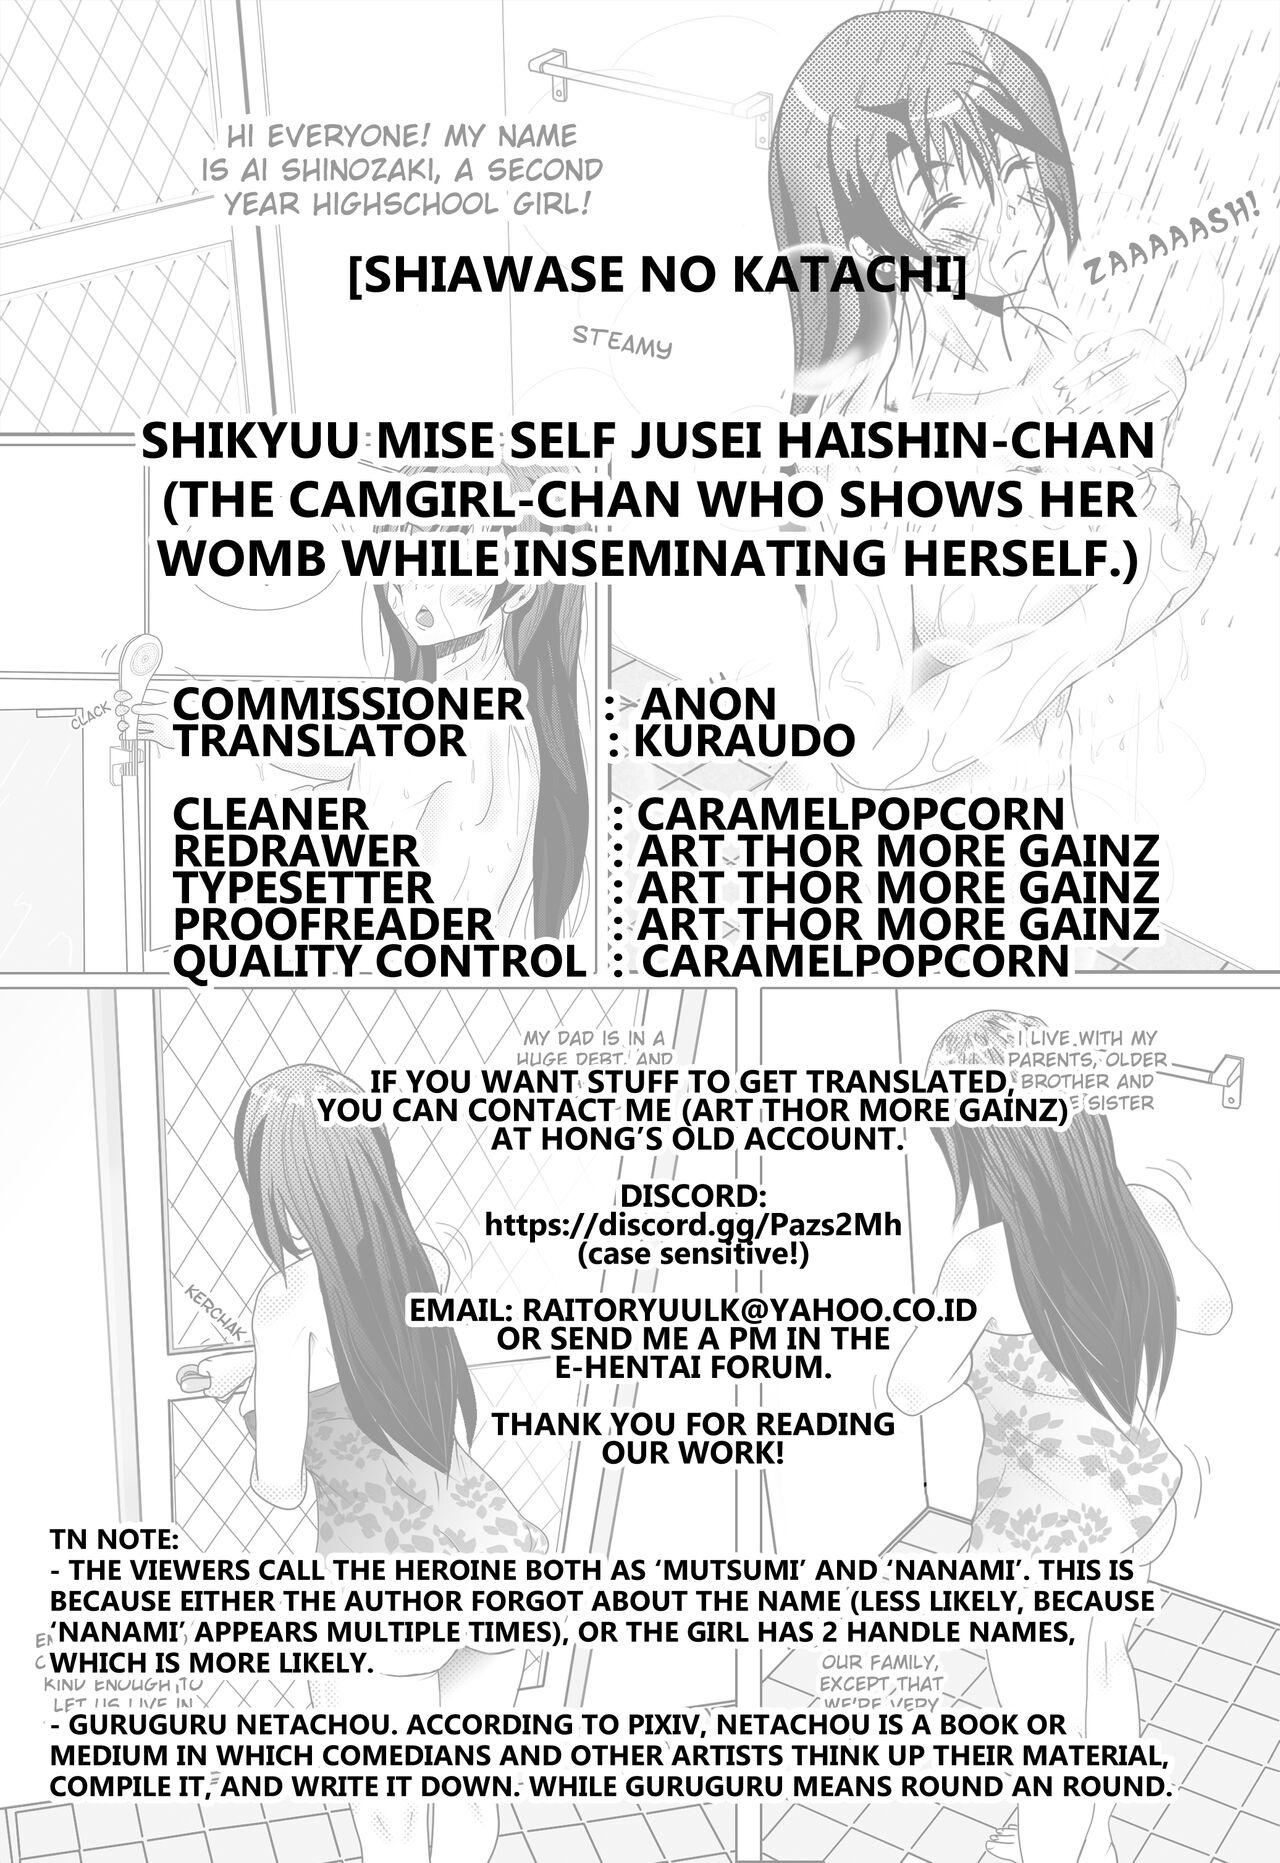 Shikyuu Mise Self Jusei Haishin-chan 10